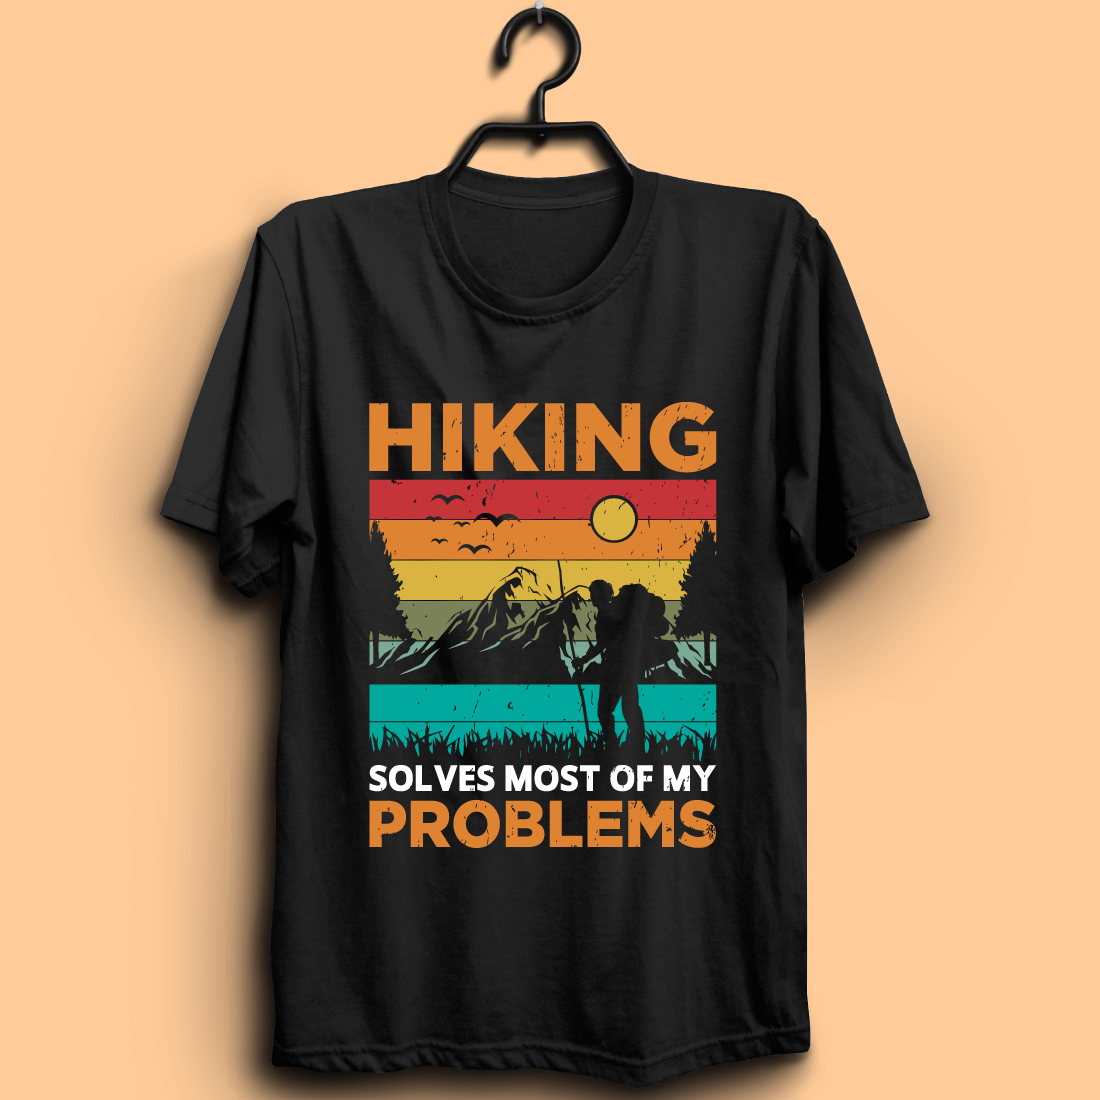 hiking t shirt design01 945